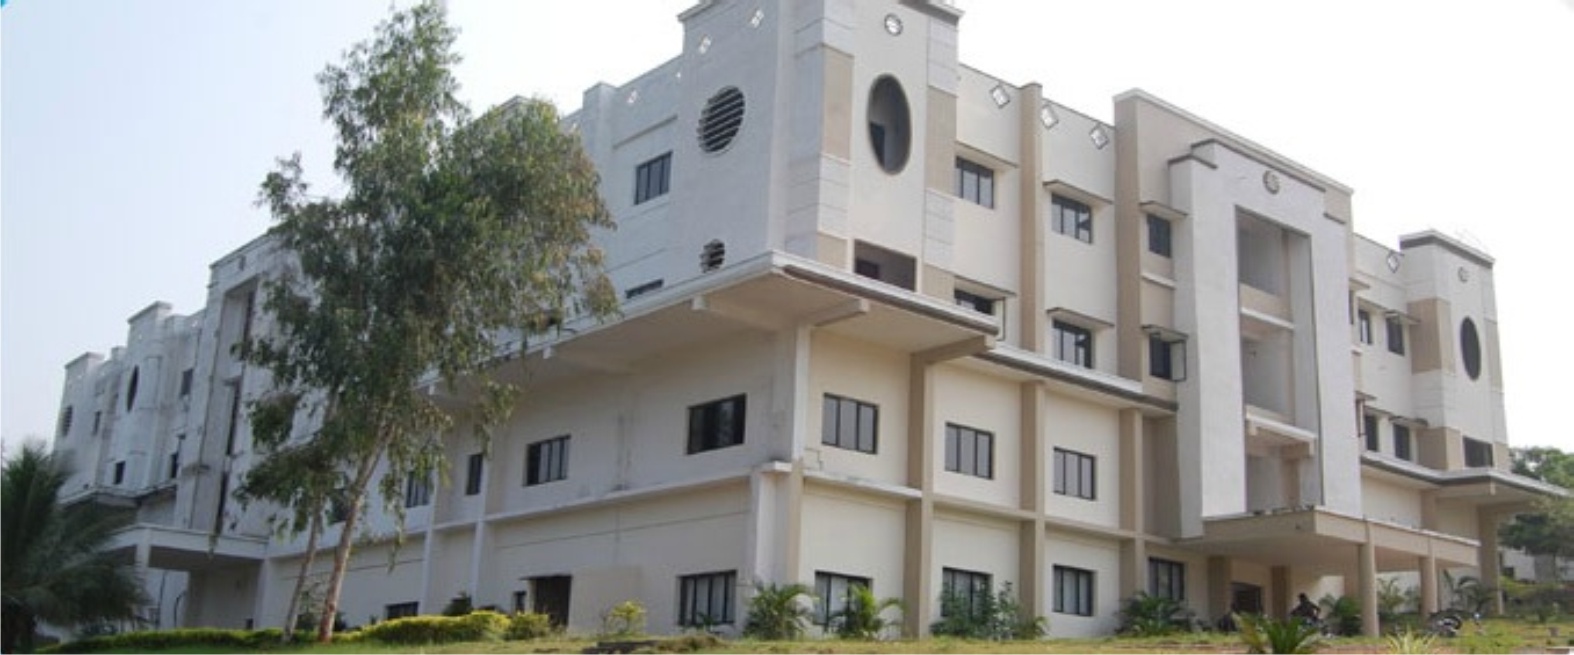 Maharajah's Institute Of Medical Sciences